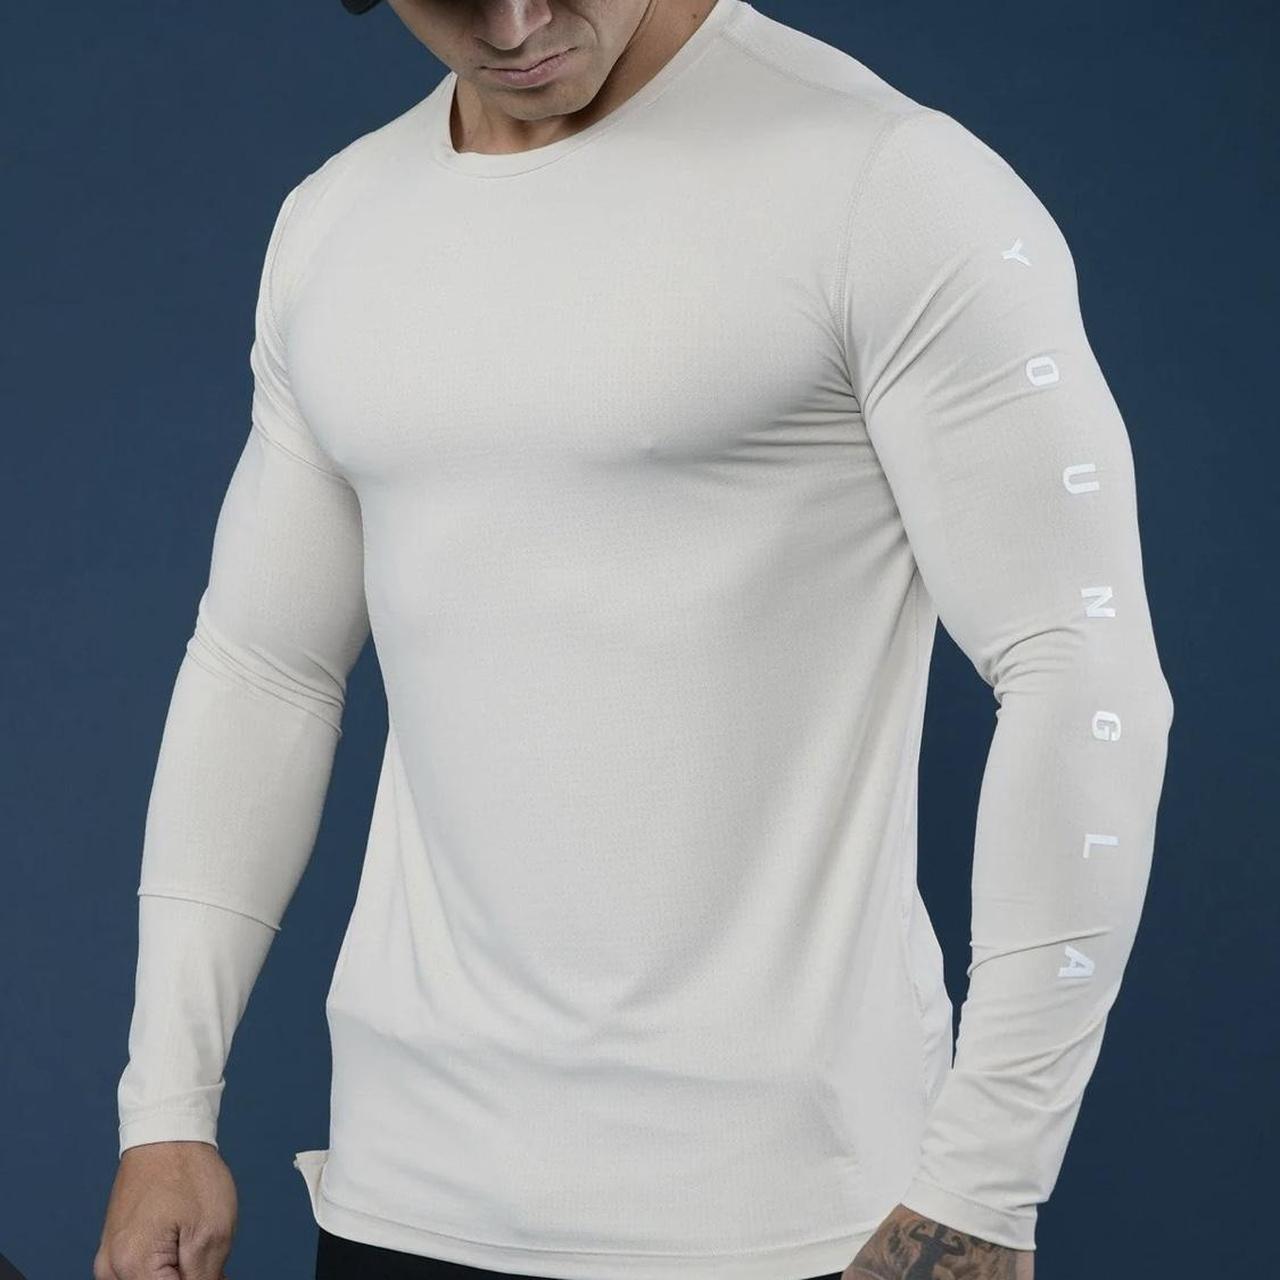 YoungLA Men's Raglan Long Sleeve Crew Neck T-Shirt